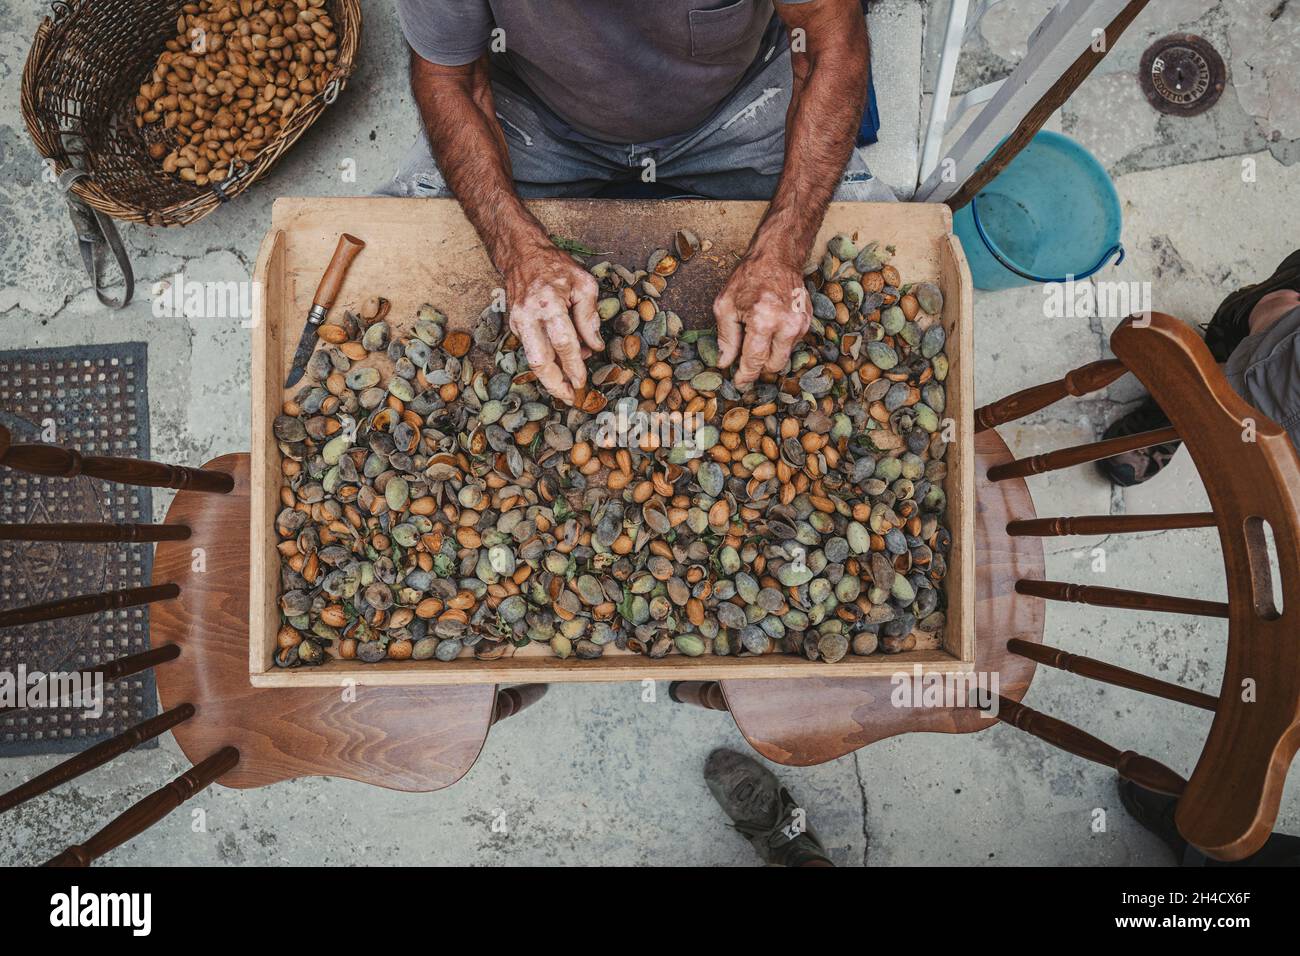 Hands of ethnically diverse senior citizen peeling the almonds Stock Photo